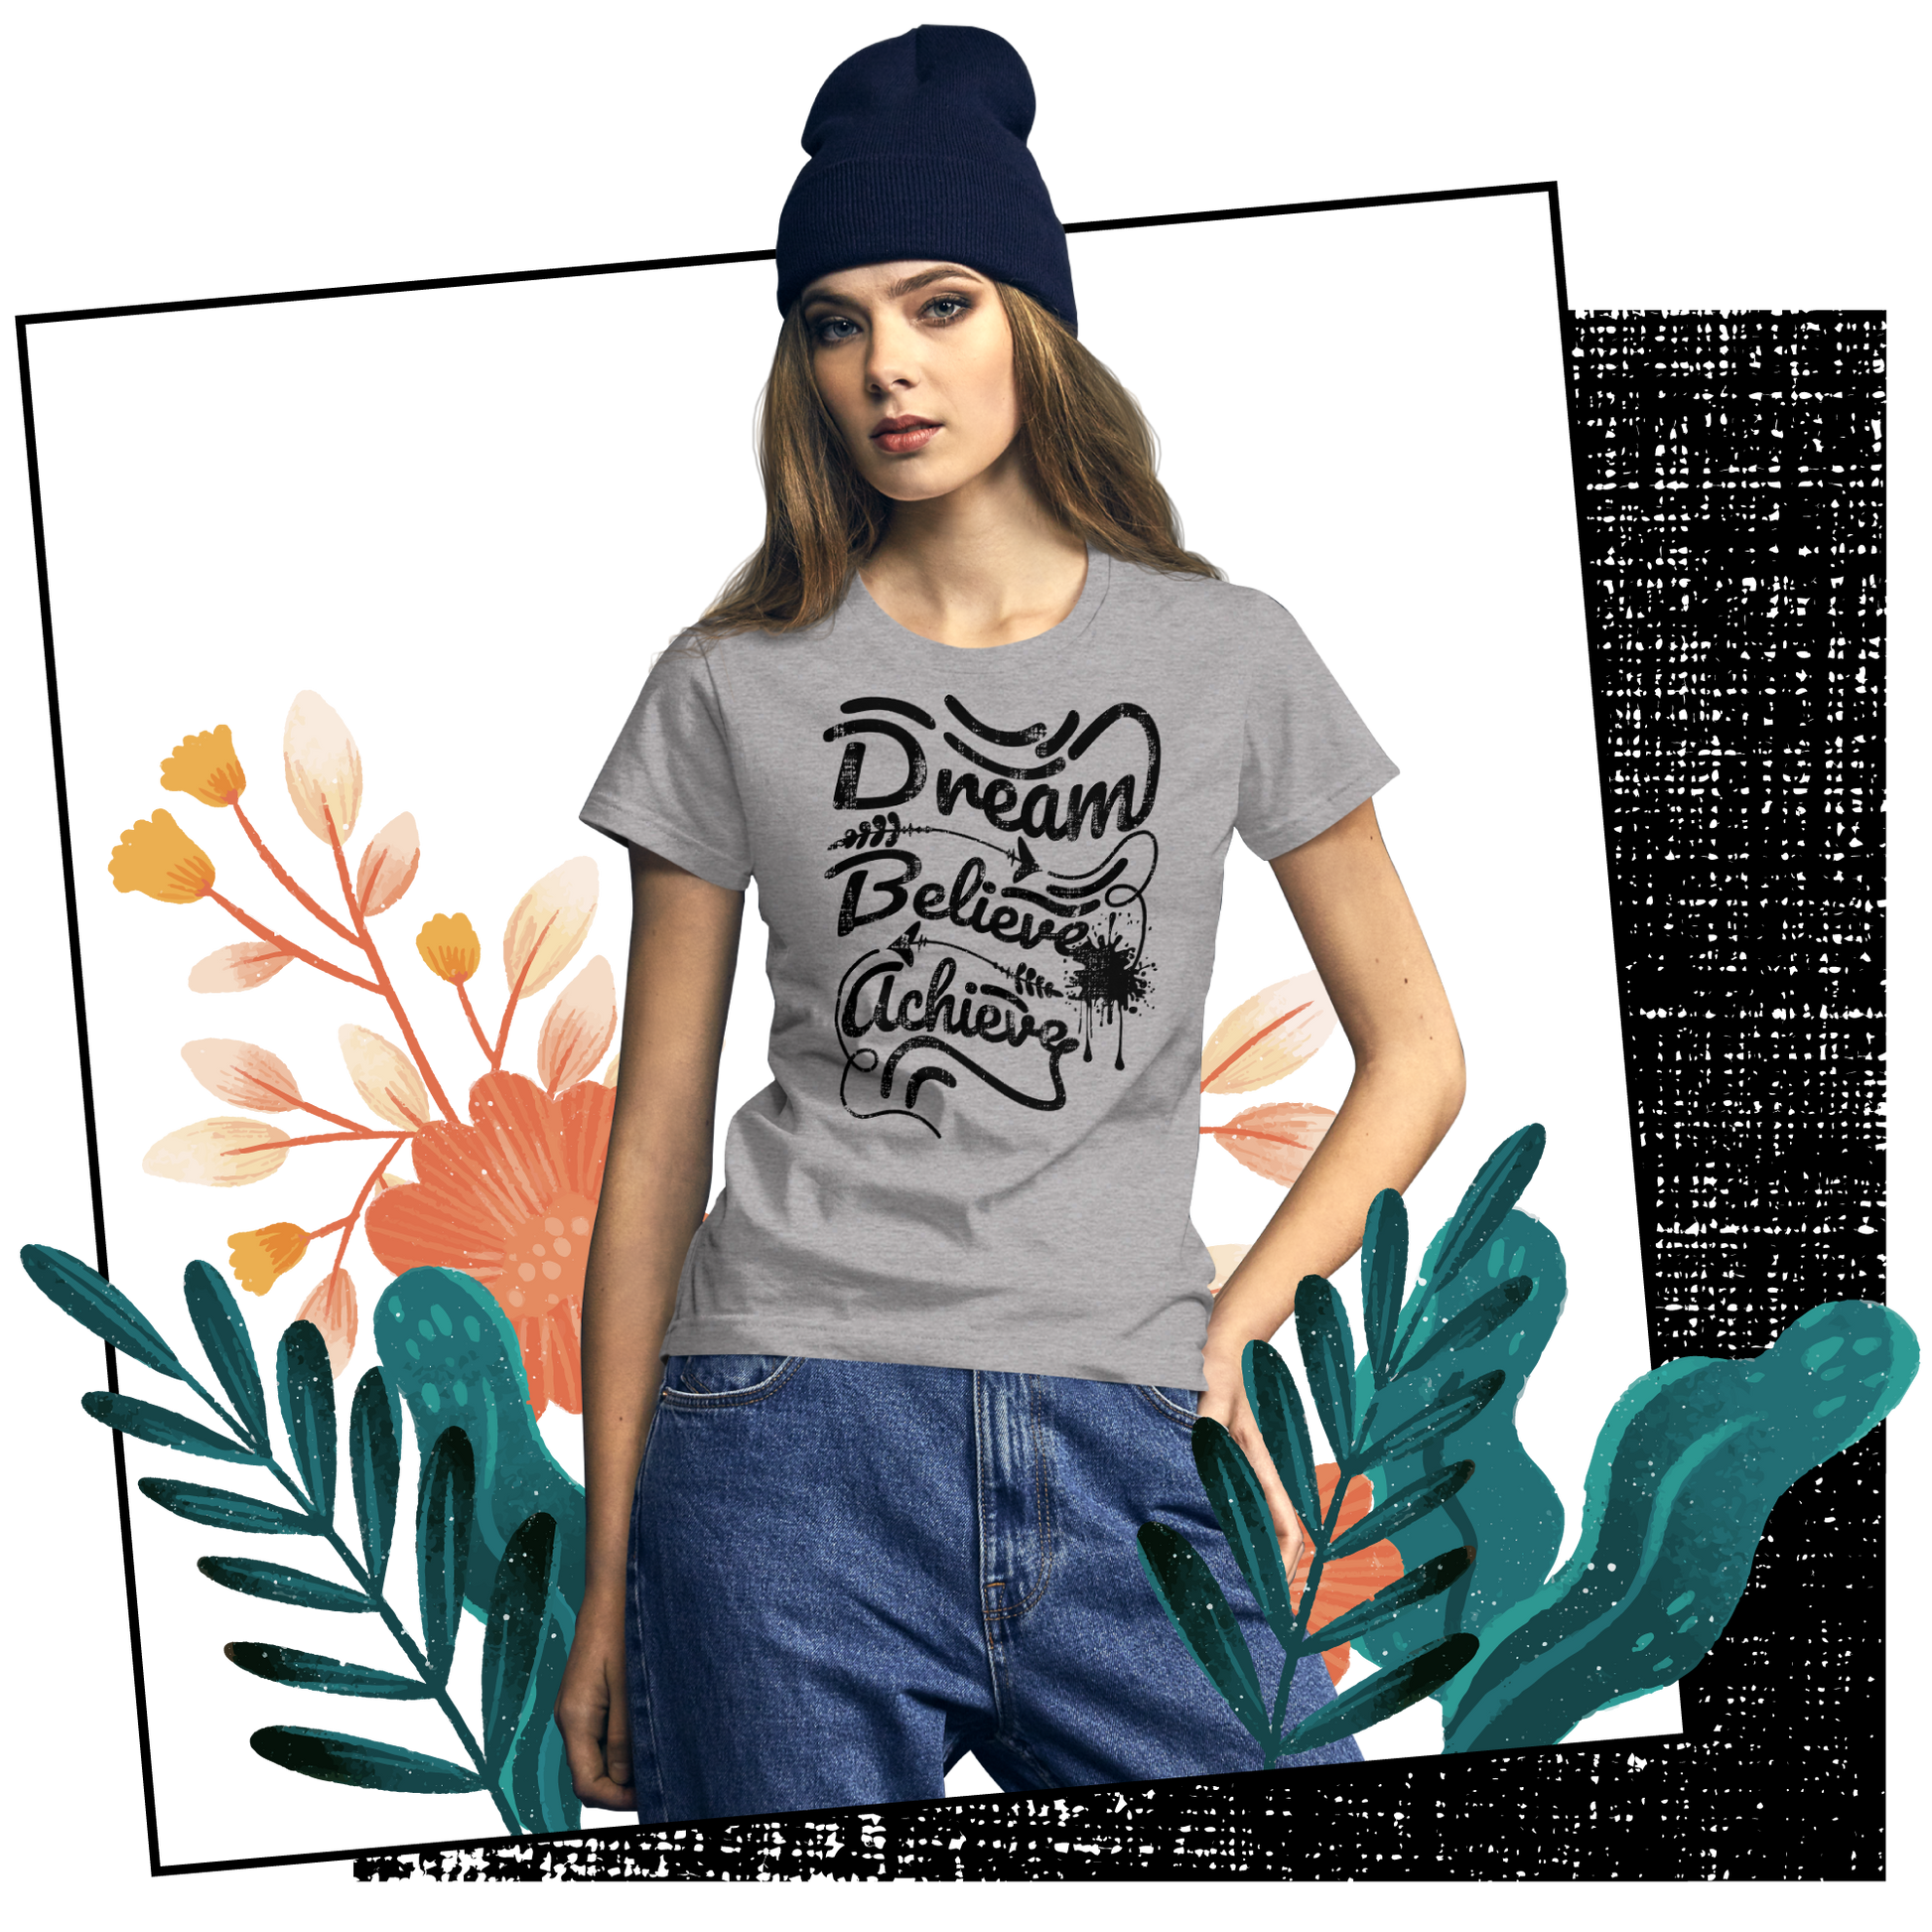 Retro Women's T-Shirt - Dream Believe Achieve Lifestyle 01